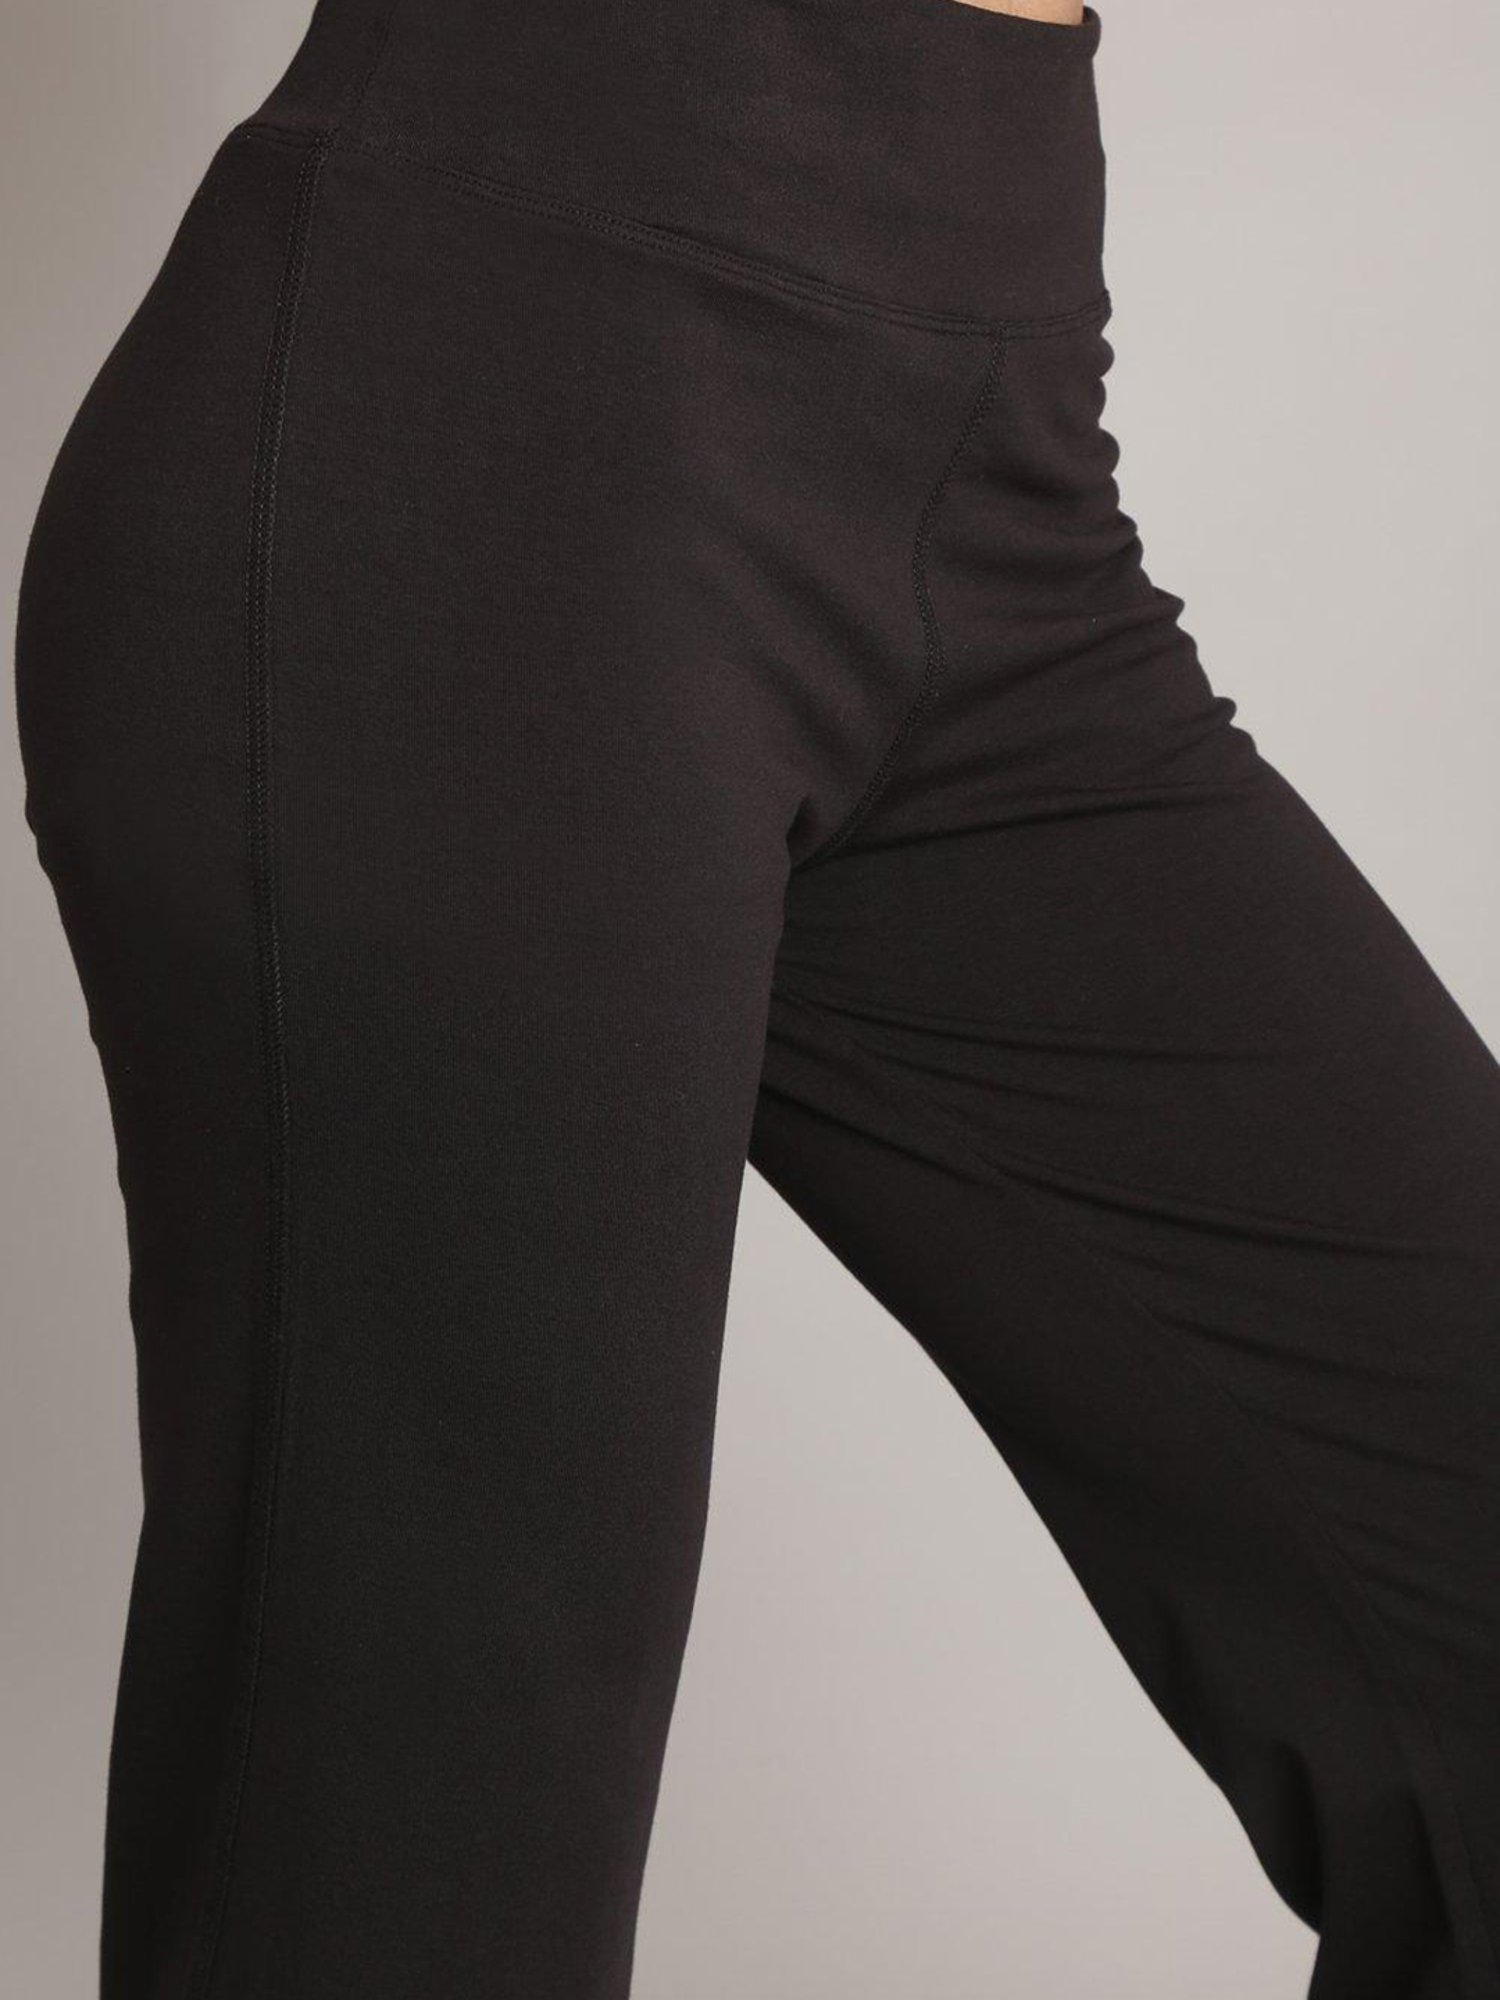 Summer Cotton Pants for Ladies Buy Black Stretchable Pants